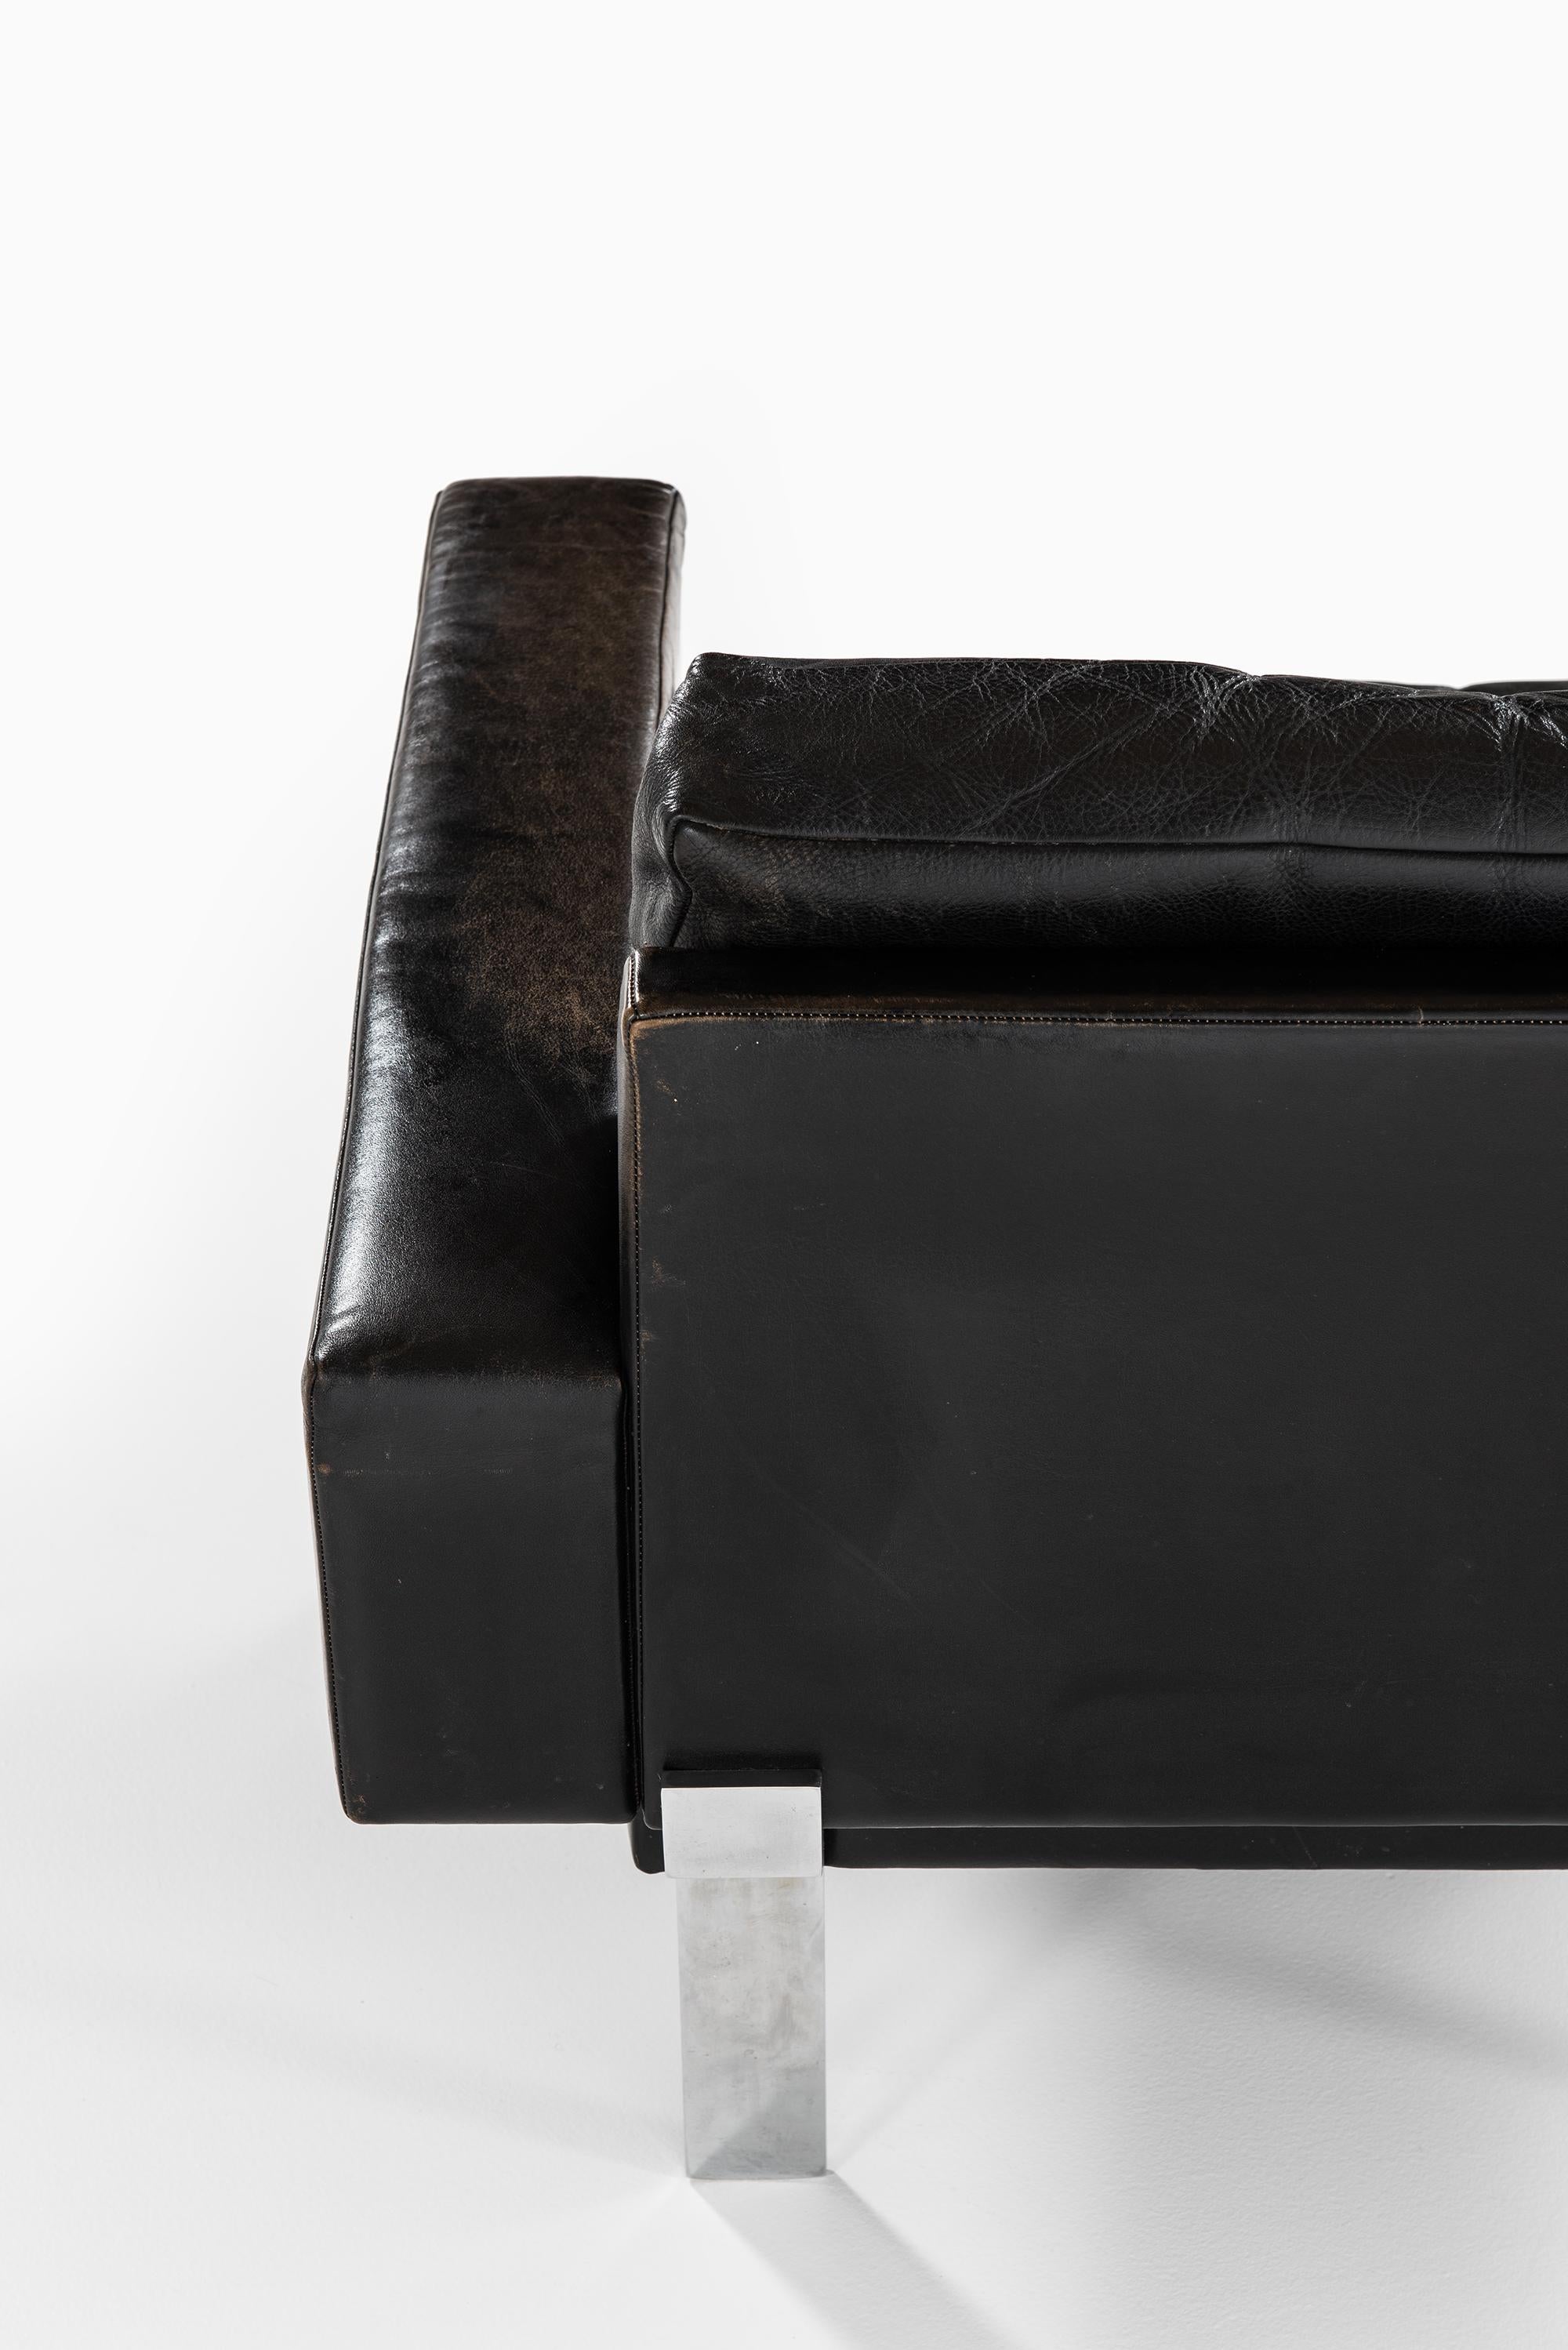 Steel Illum Wikkelsø Easy Chair by Michael Laursen in Denmark For Sale